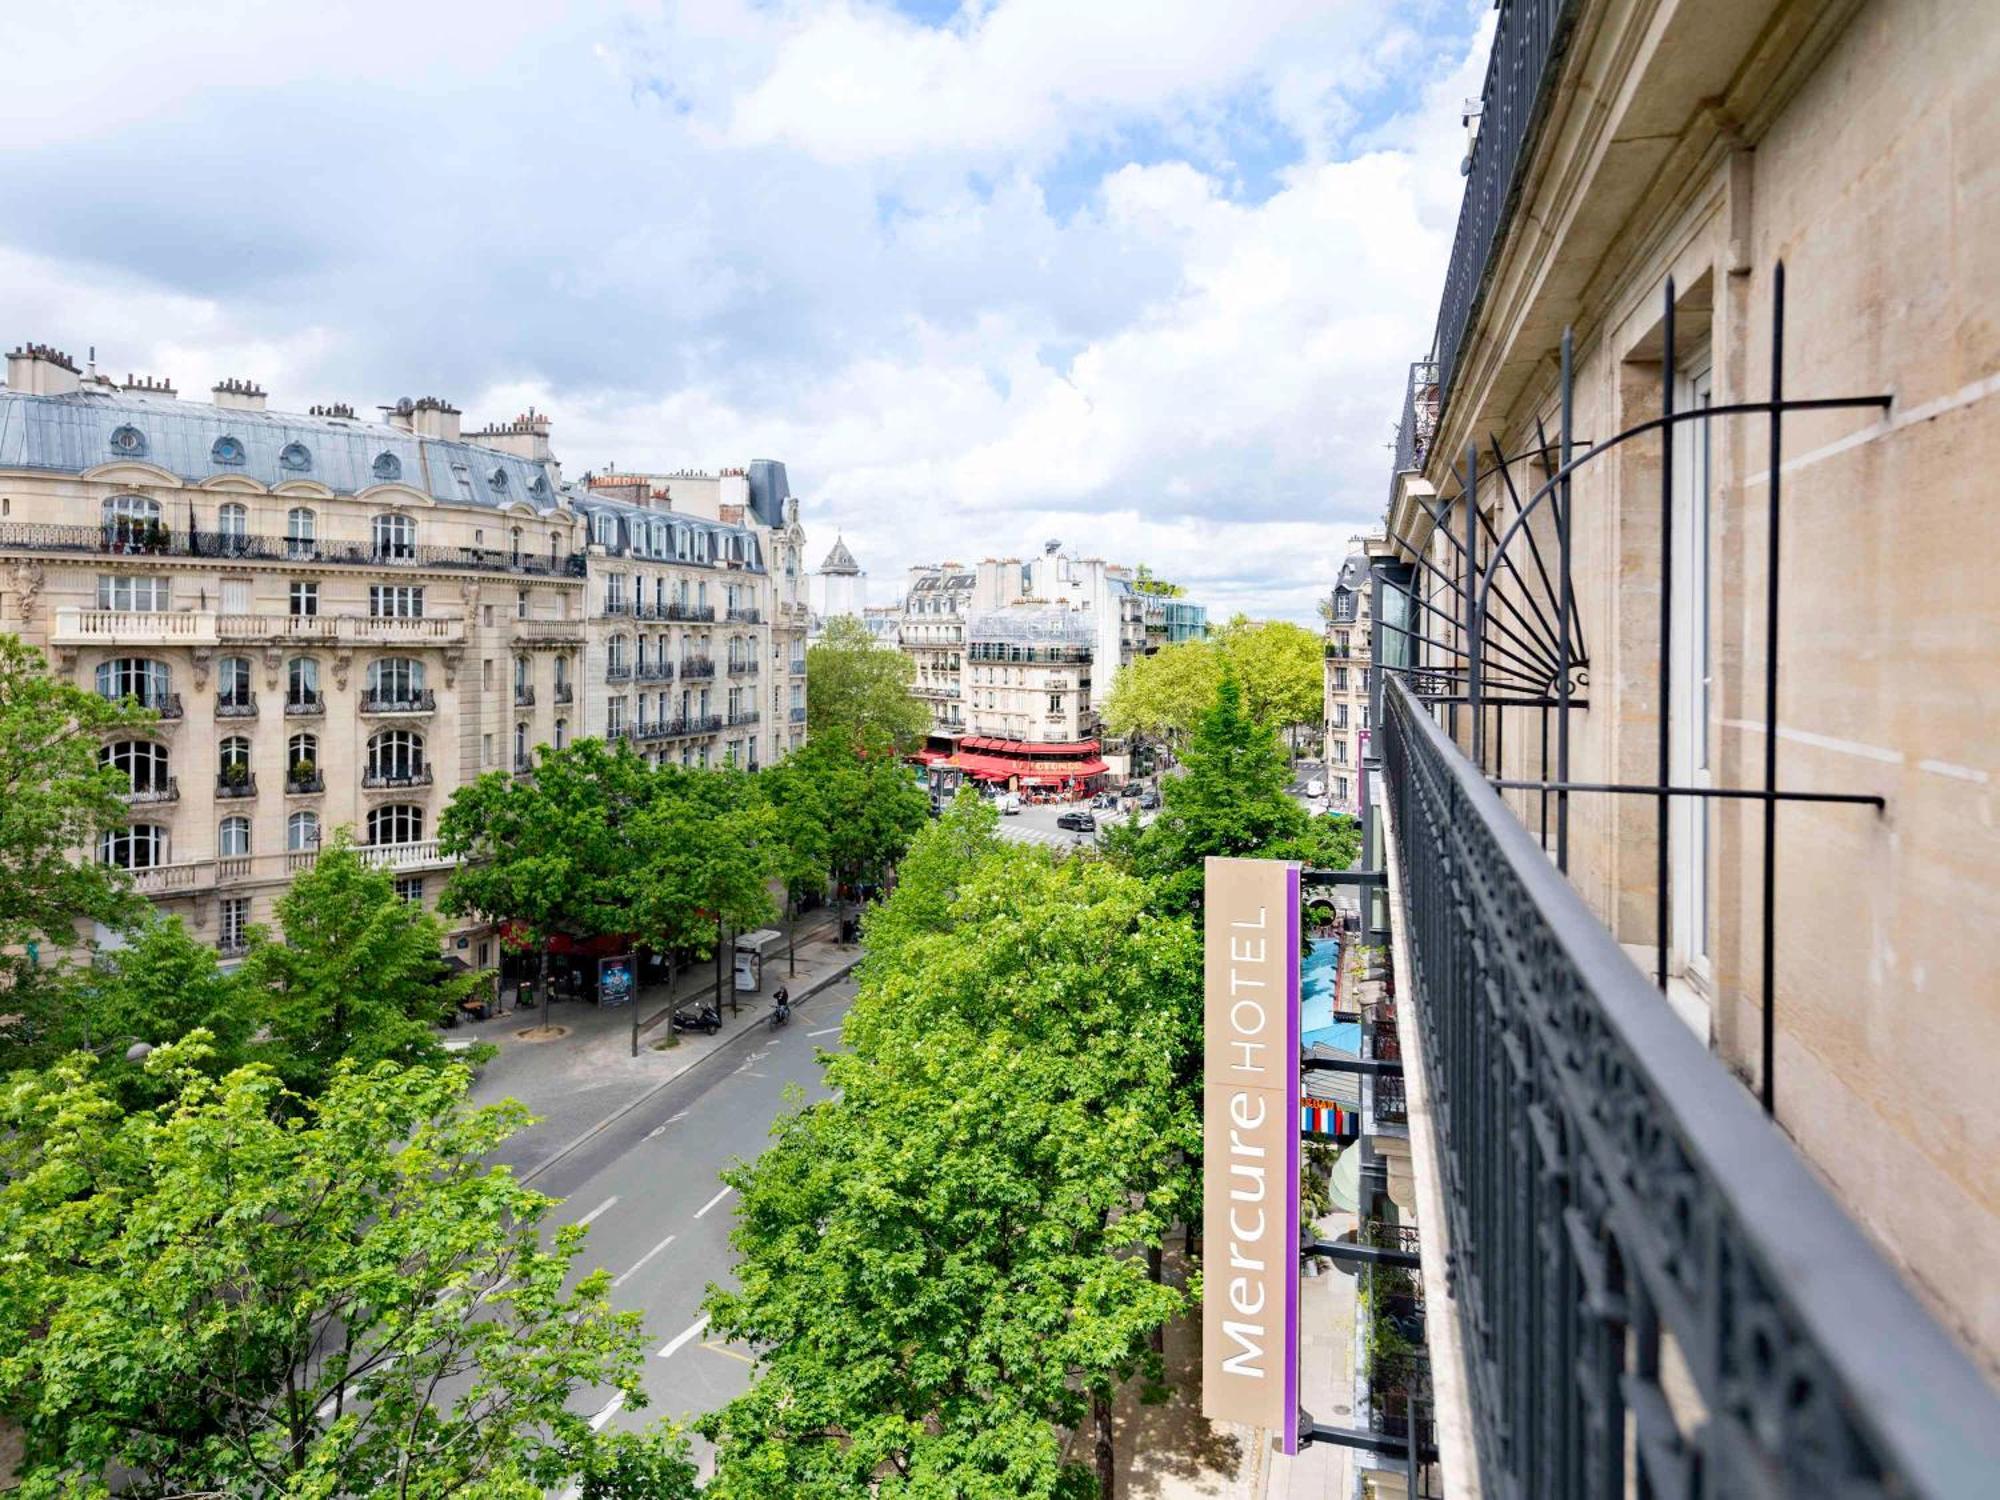 Mercure Paris Montparnasse Raspail מראה חיצוני תמונה